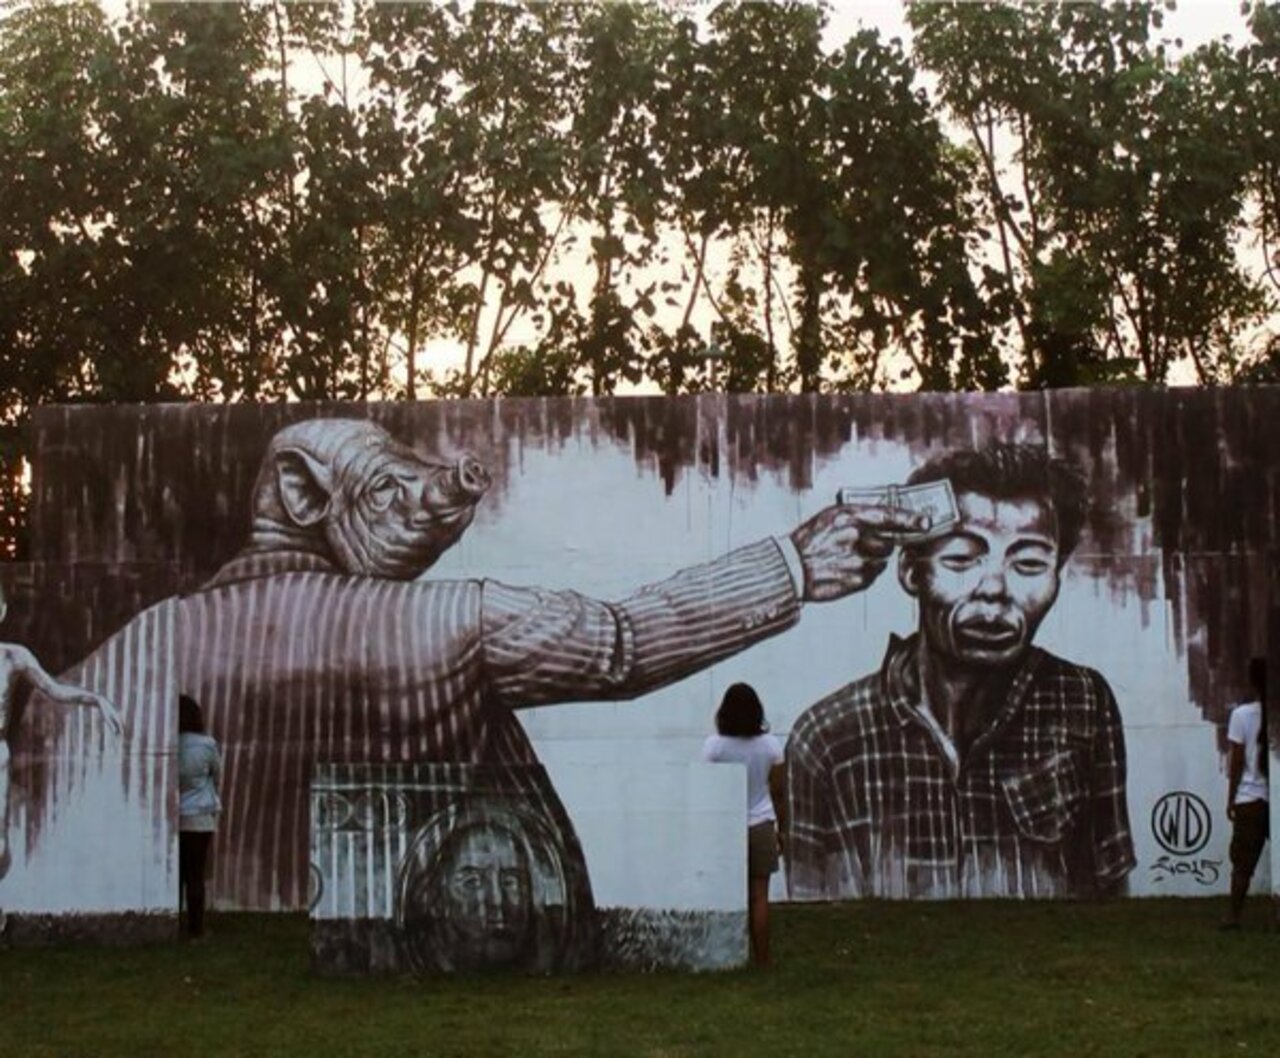 'Money Kills' Street Art by the artist WD #art https://t.co/0A4qJASyr0